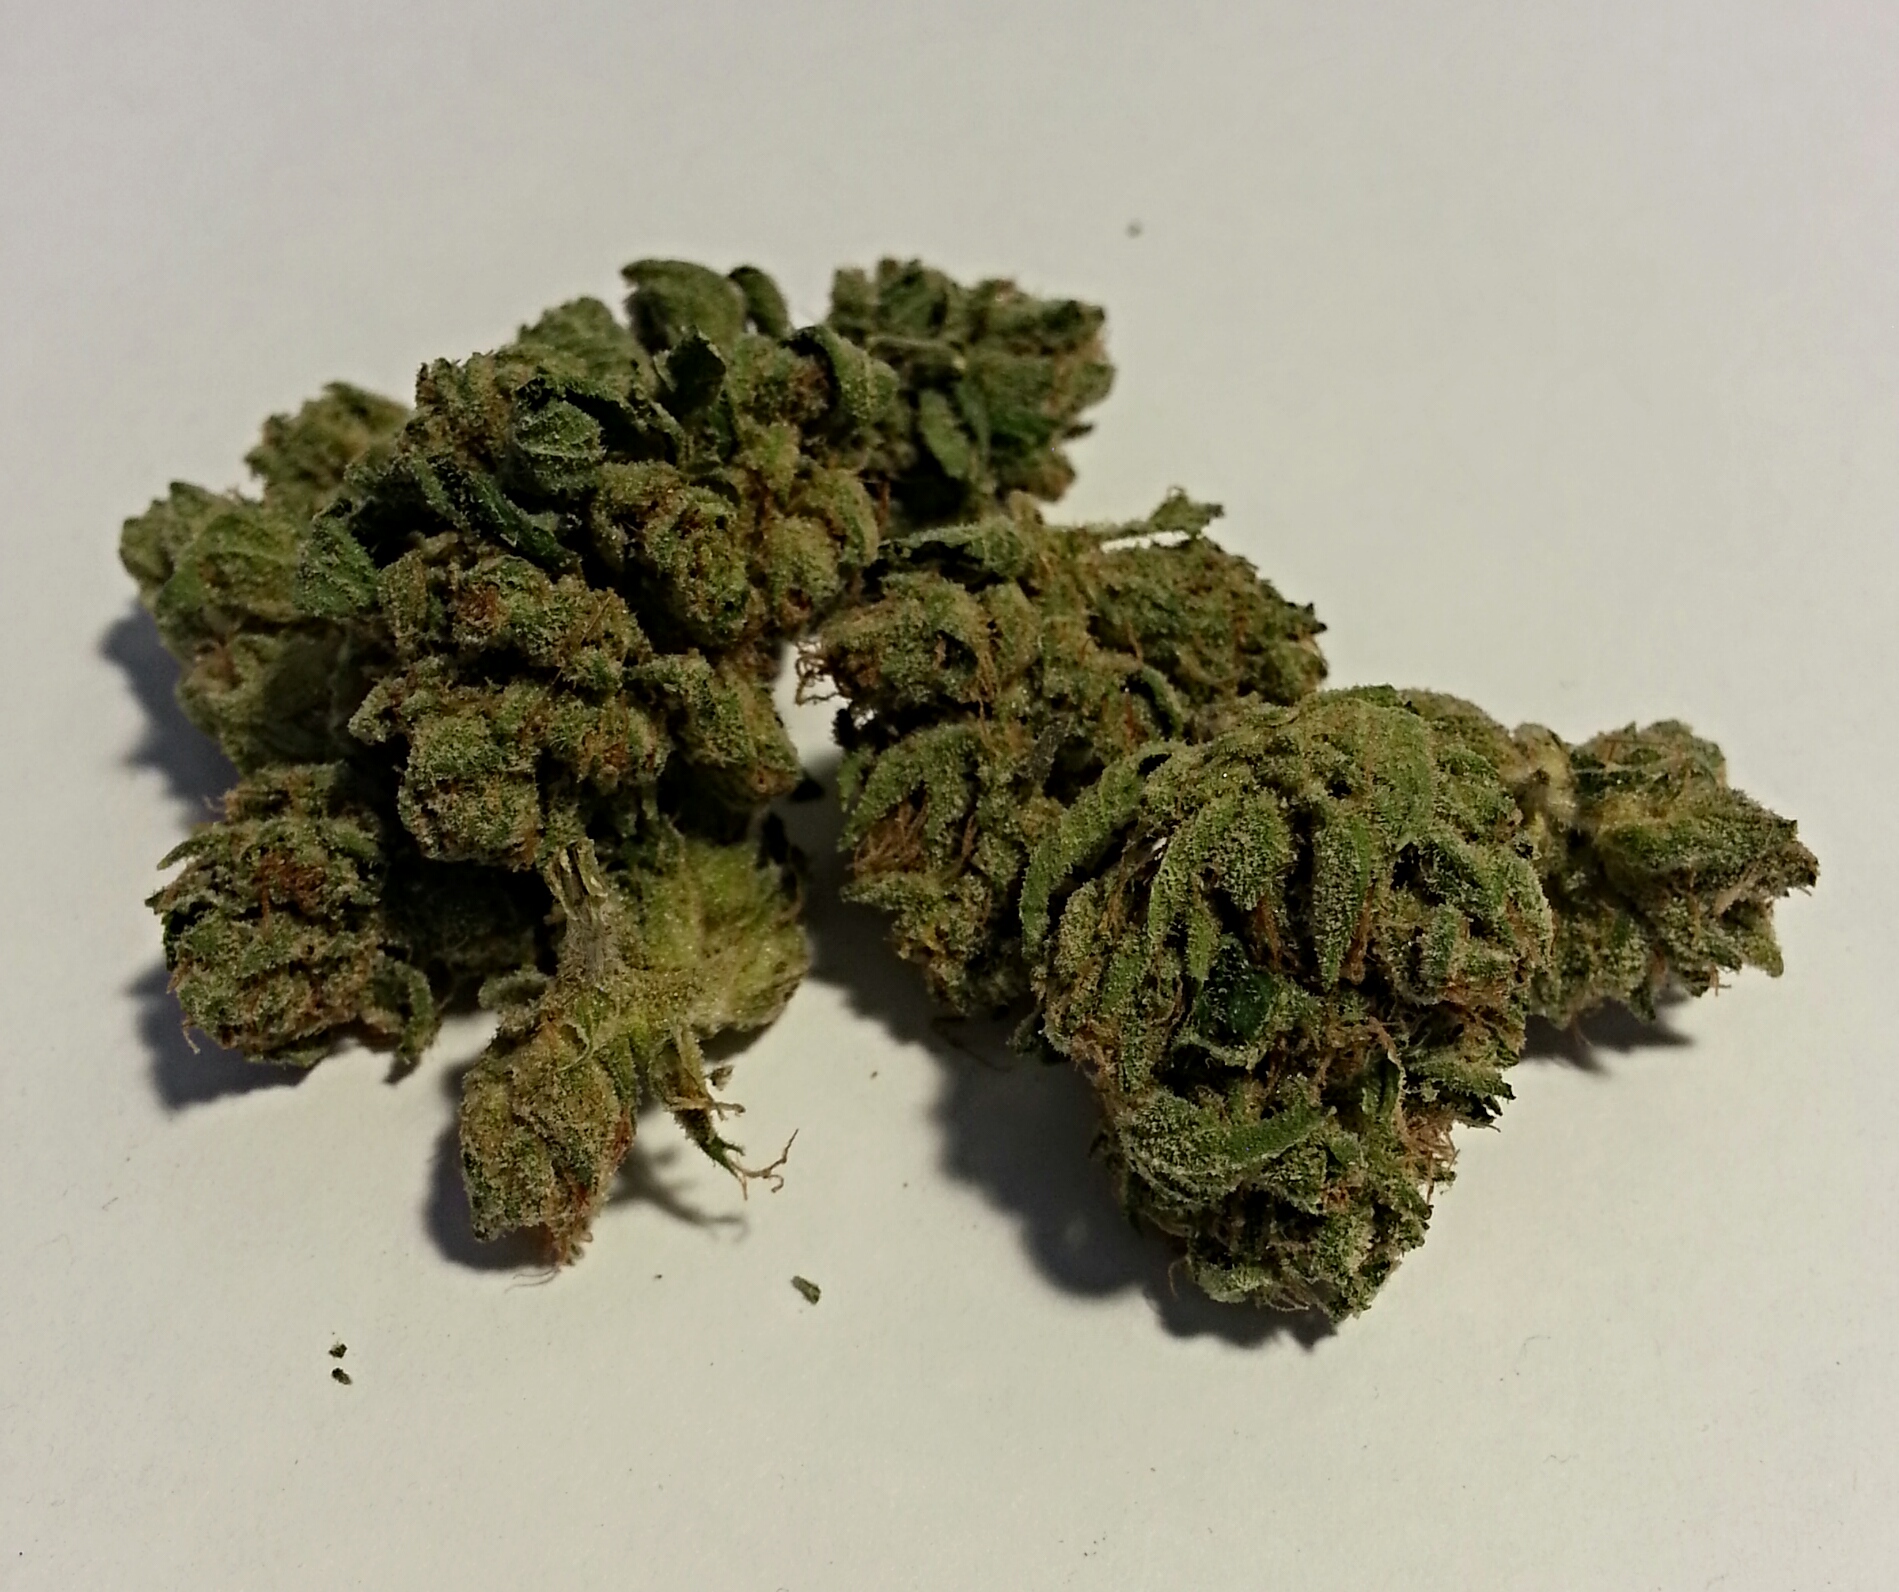 King Louis XIII from OCPC Medical Marijuana Review